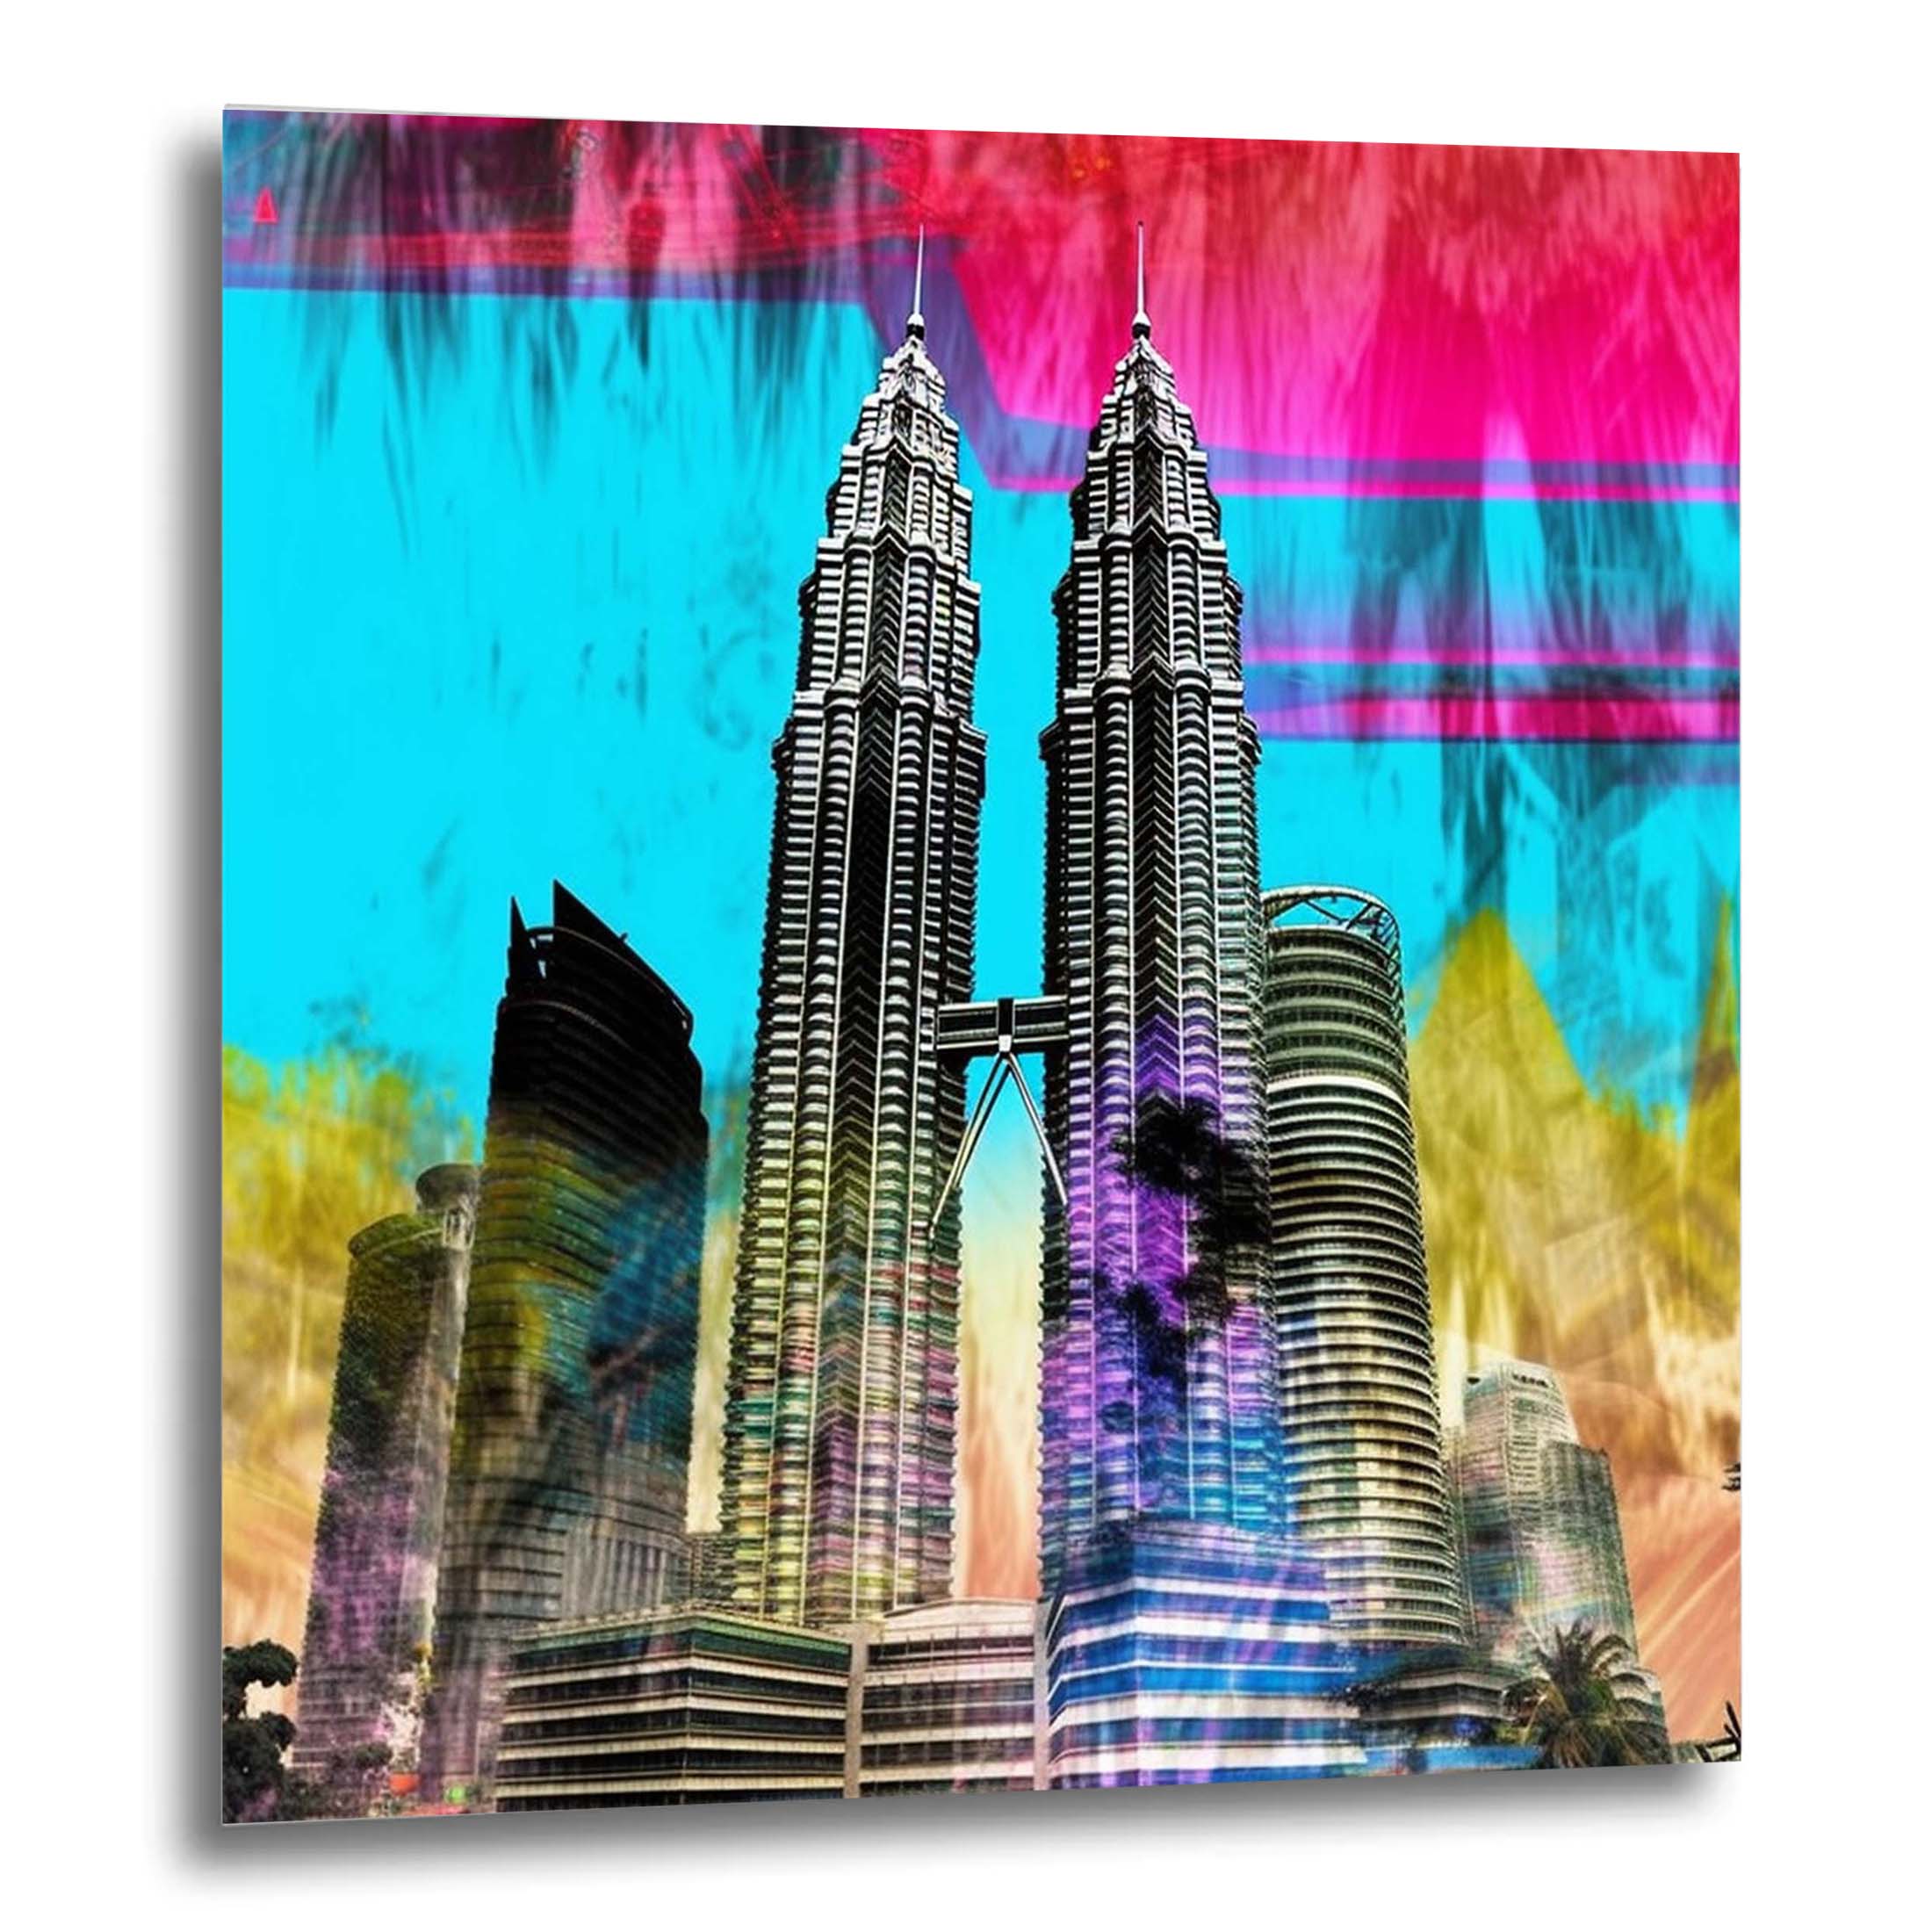 Petronas Towers Kuala Lumpur - mural in pop art style – urbanisto - Liebe  Deine Welt. - Urbanisto